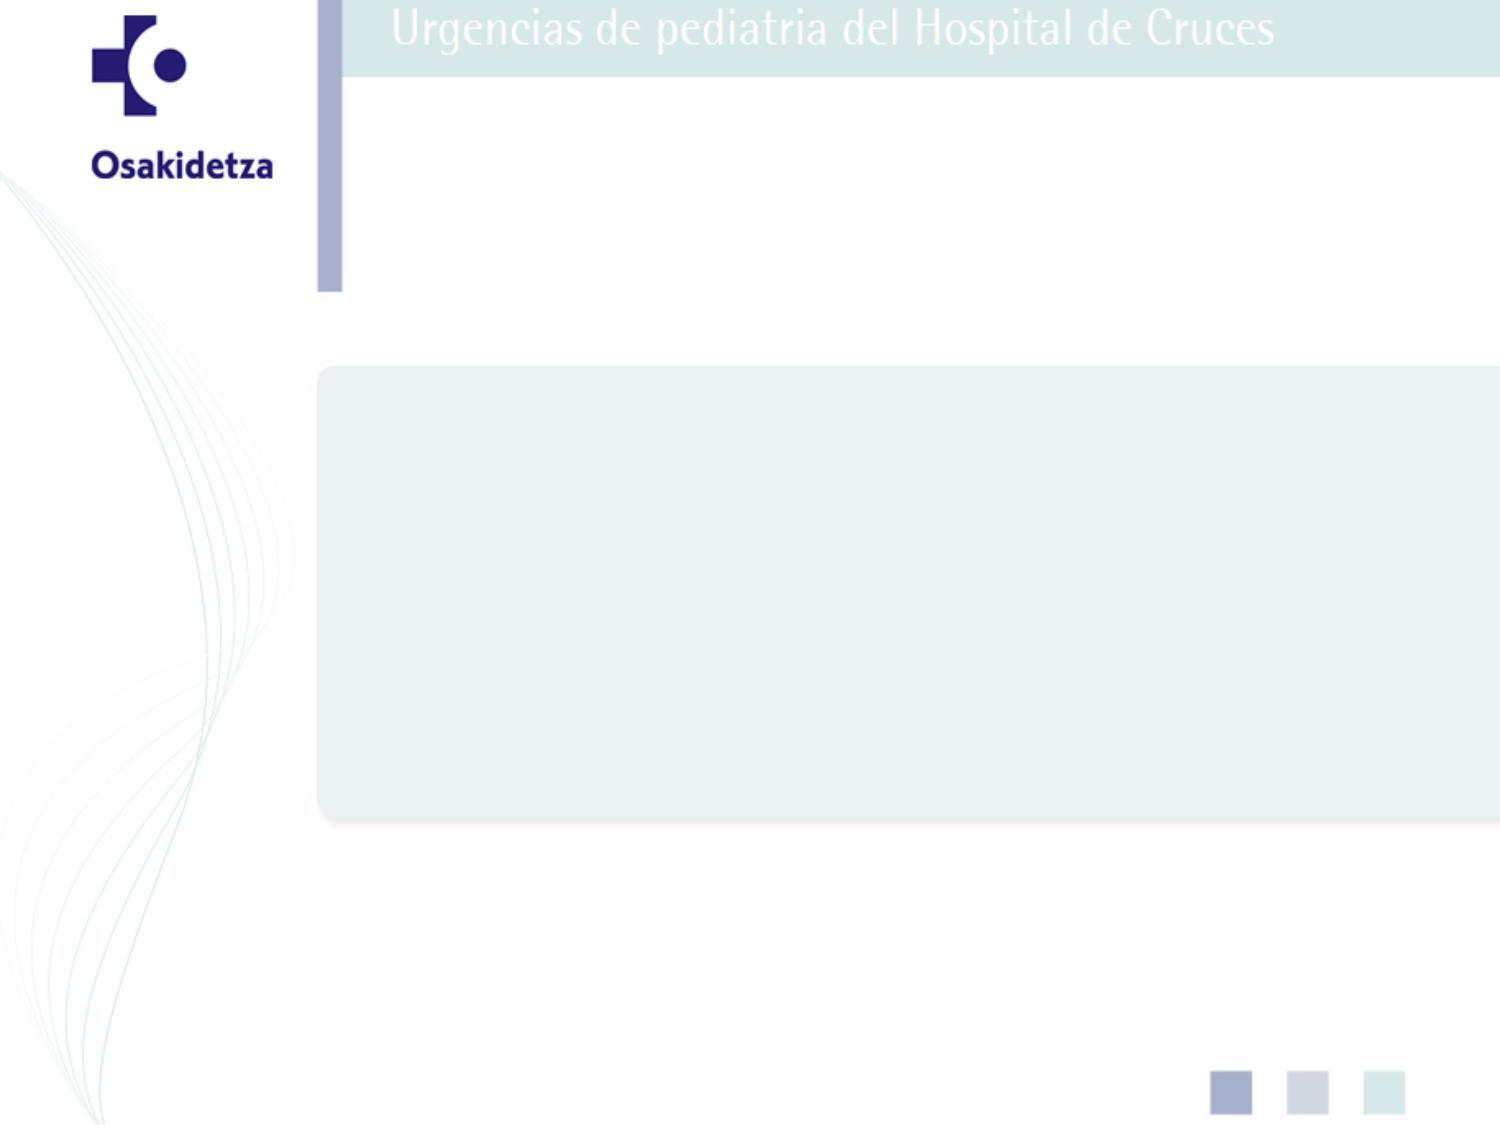 www.urgenciaspediatria.hospitalcruces.